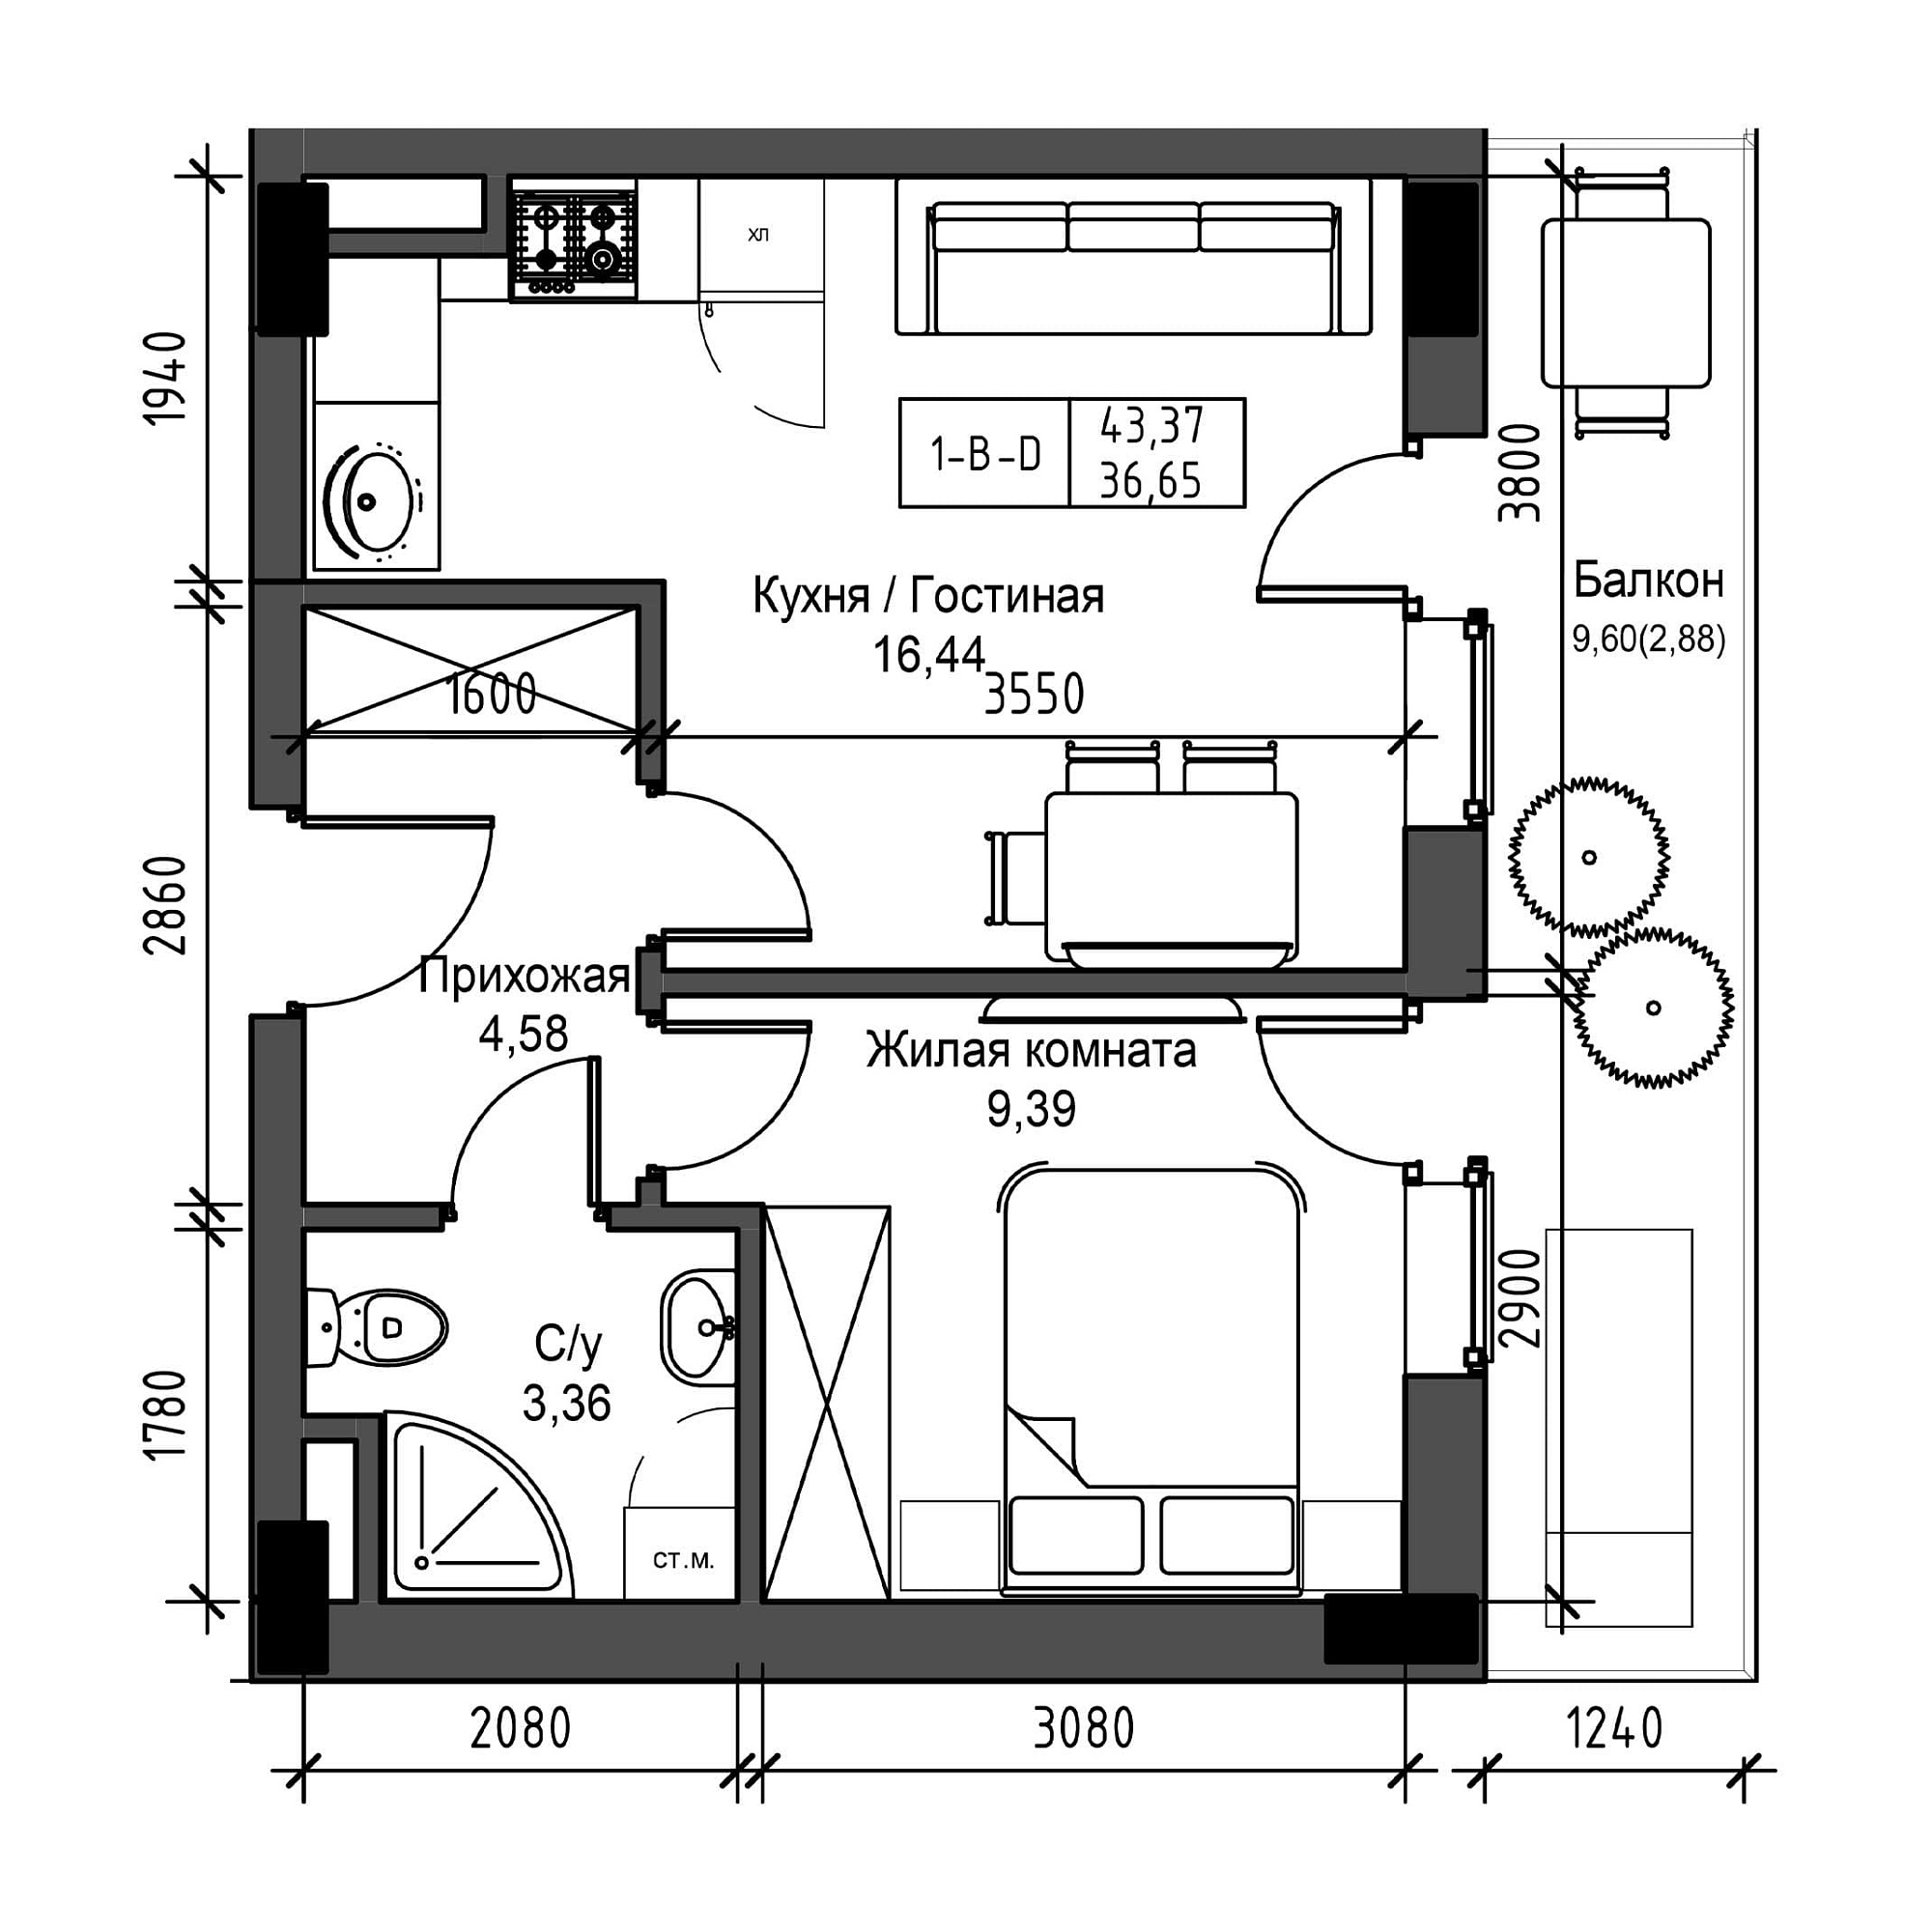 Планування 1-к квартира площею 36.65м2, UM-001-04/0002.